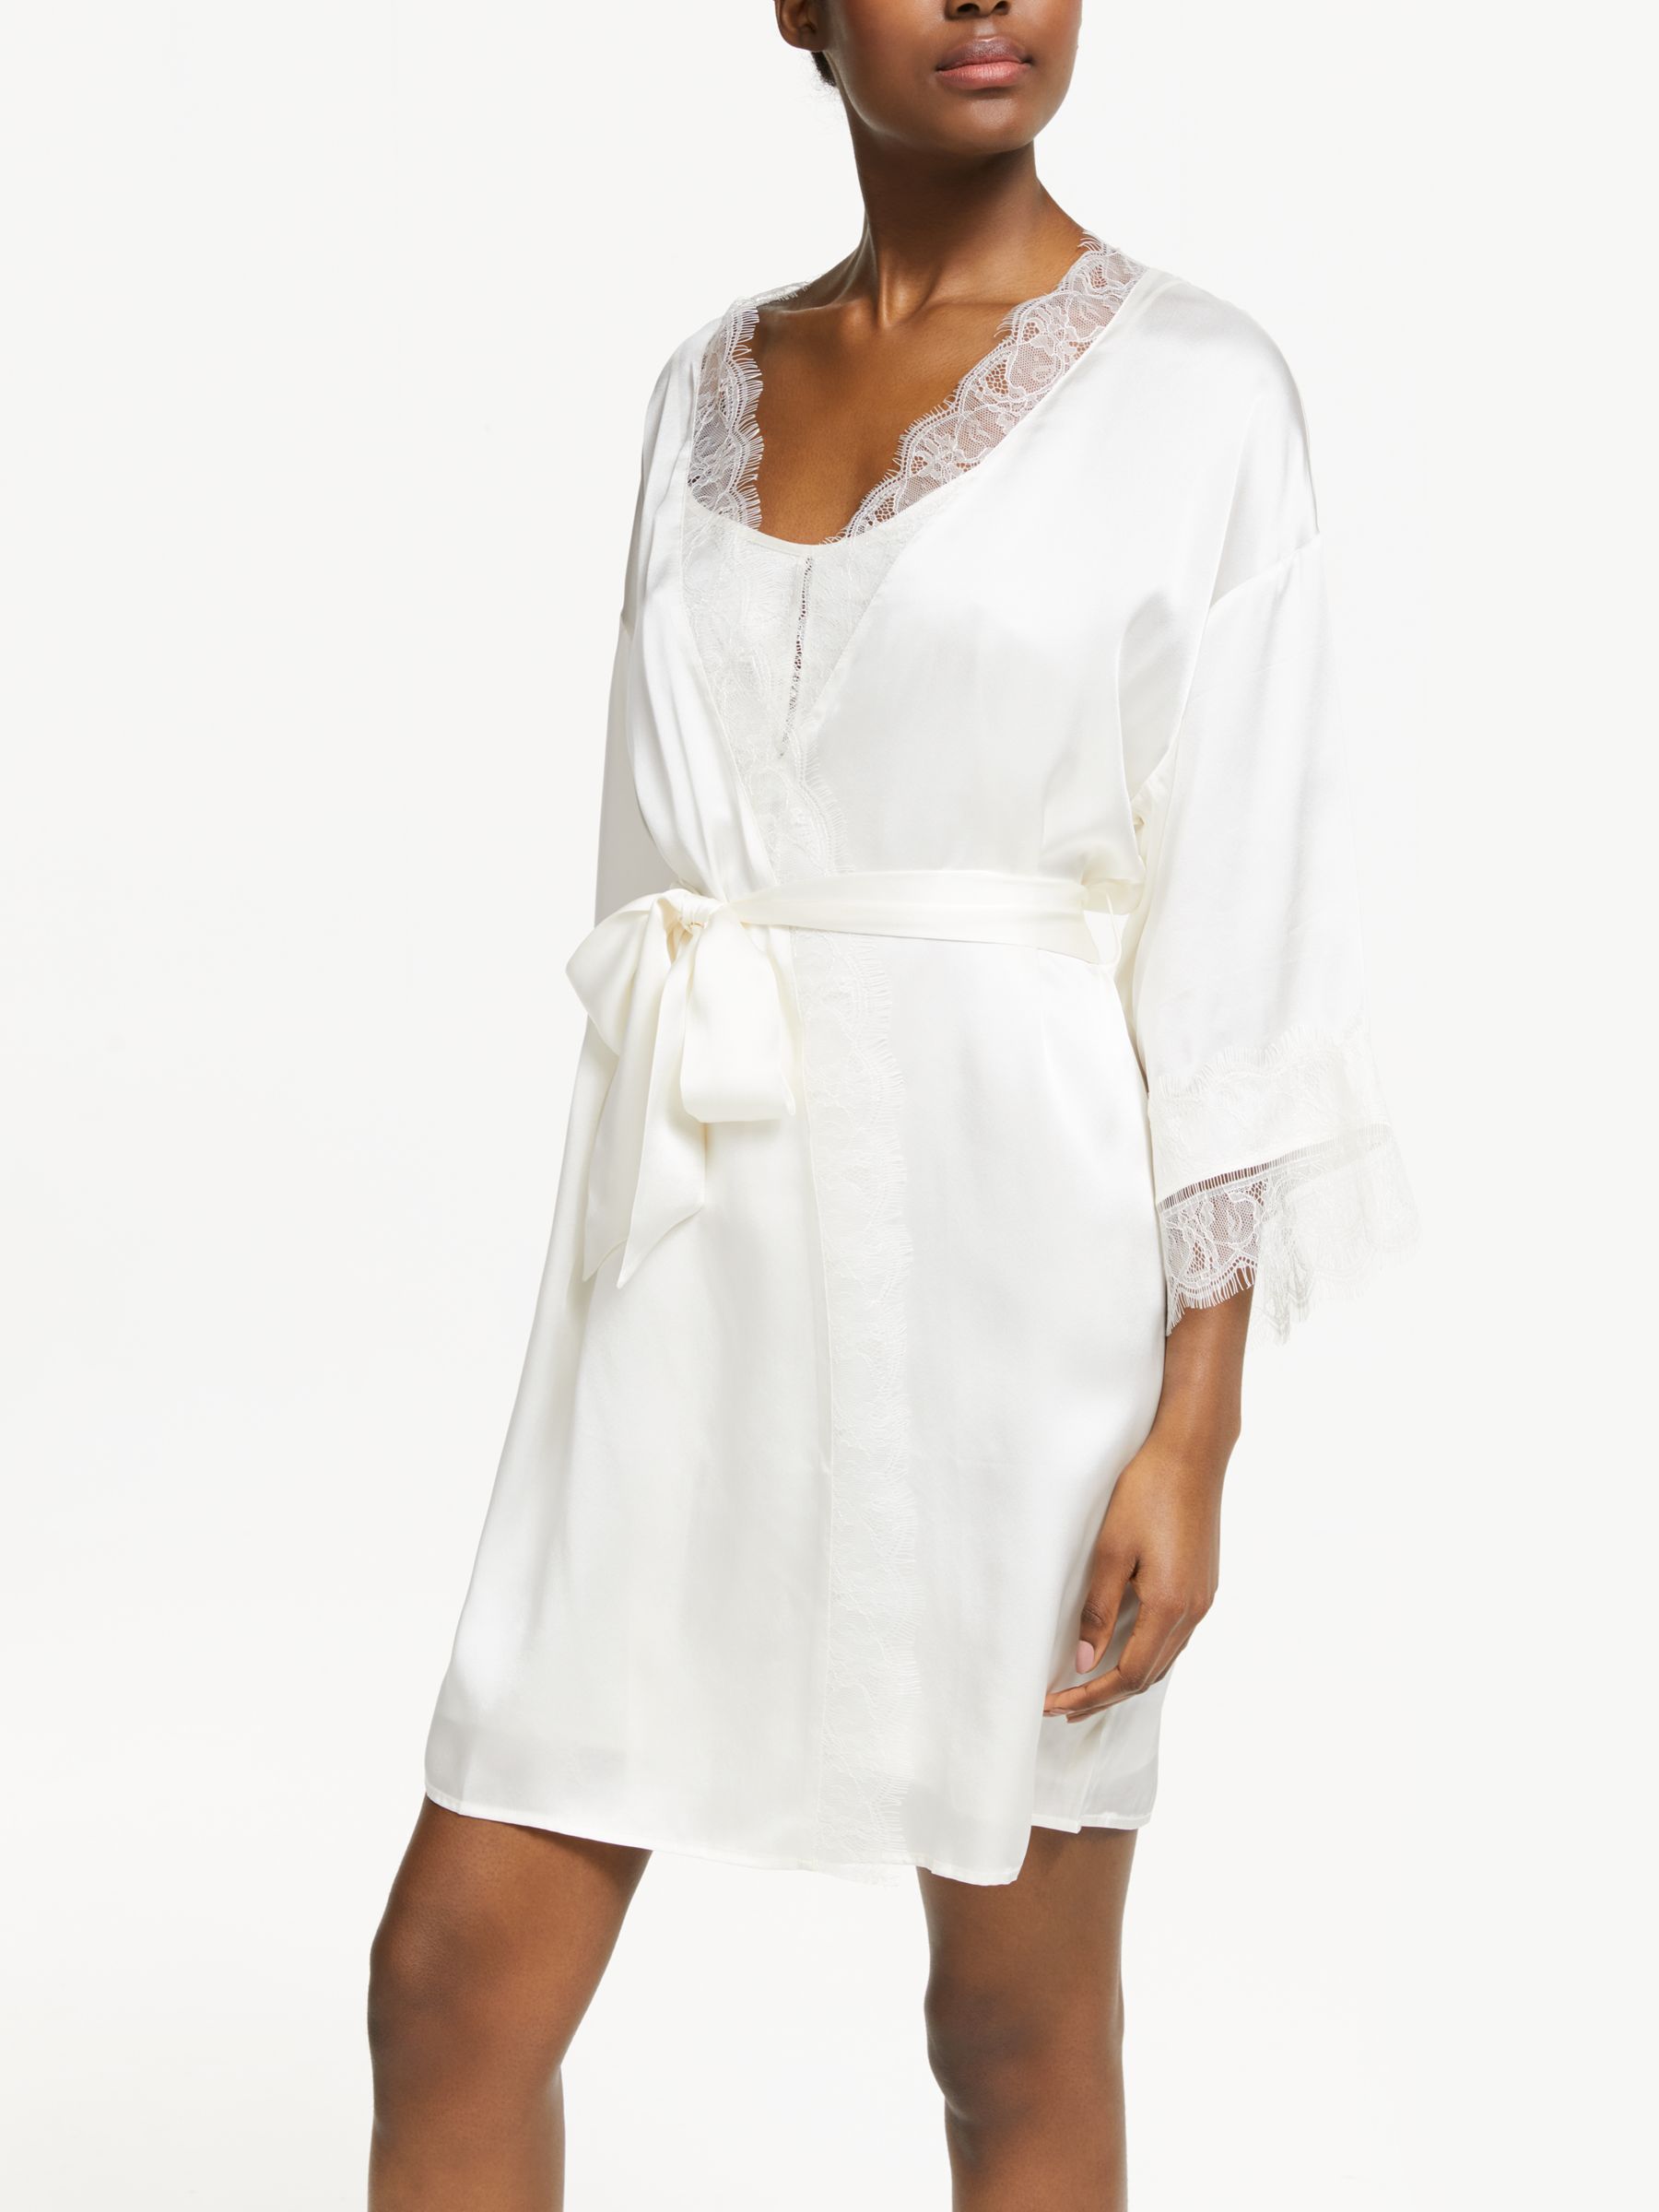 Robes & Dressing Gowns | Women's Nightwear | John Lewis & Partners